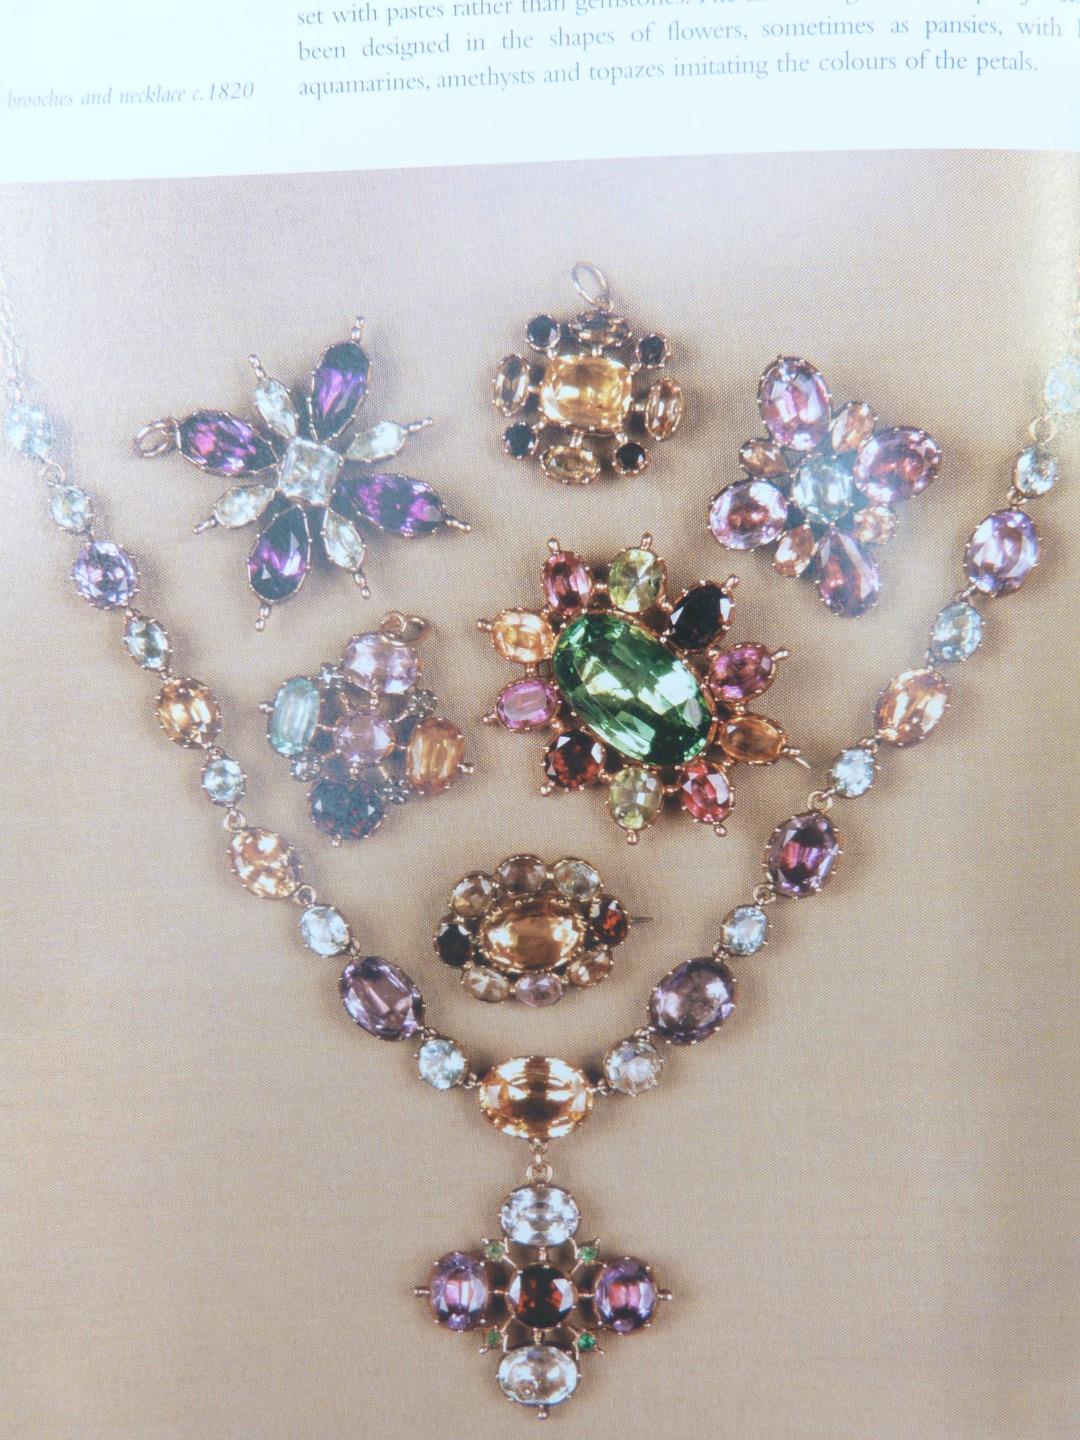 Georgian Jewellery 1714-1830, Ginny Redington Dawes with Olivia Collings, 2007 edition - Image 4 of 6